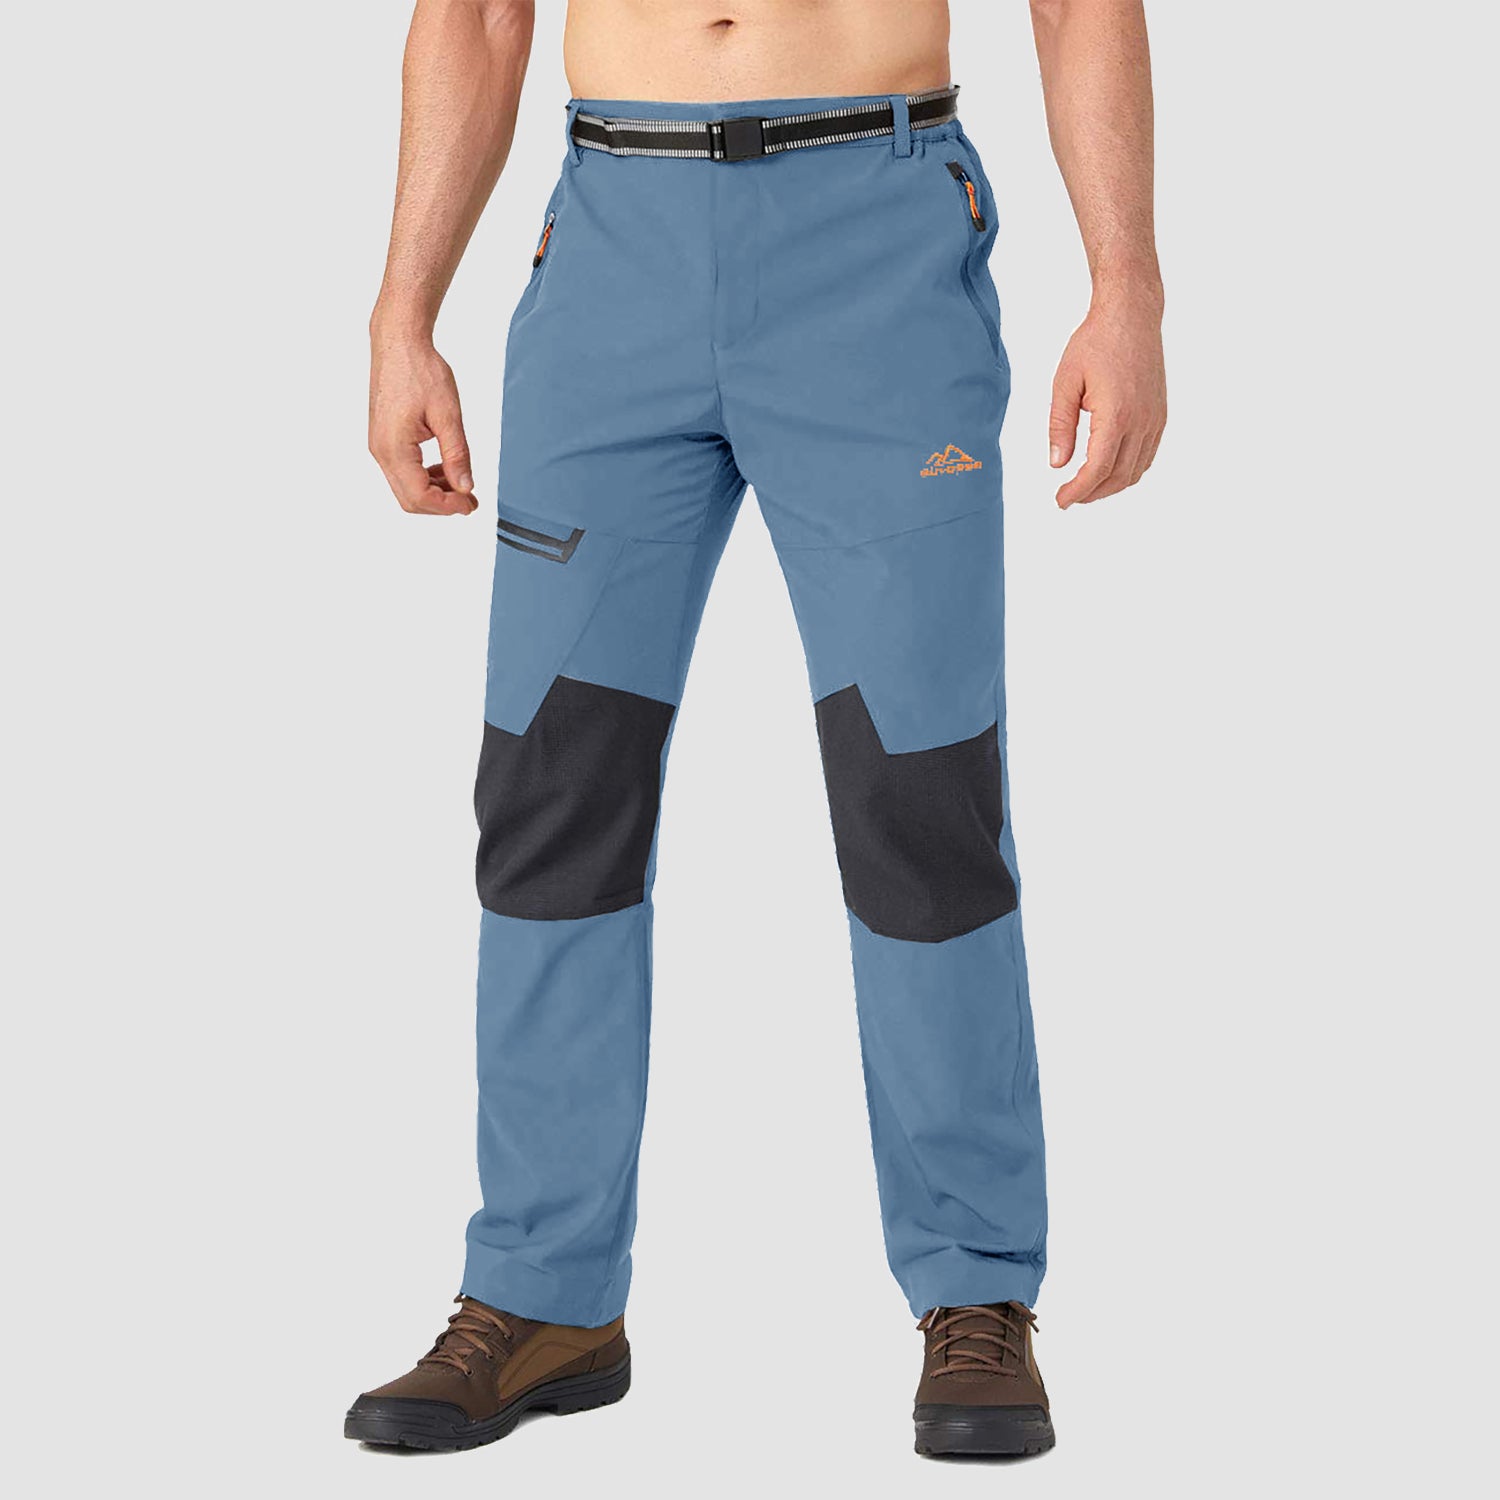 XFLWAM Cargo Pants for Men Match Mens Casual Winter Fleece Trousers Water  Resistant Wild Men's Work Pants Stretch Gray XL - Walmart.com